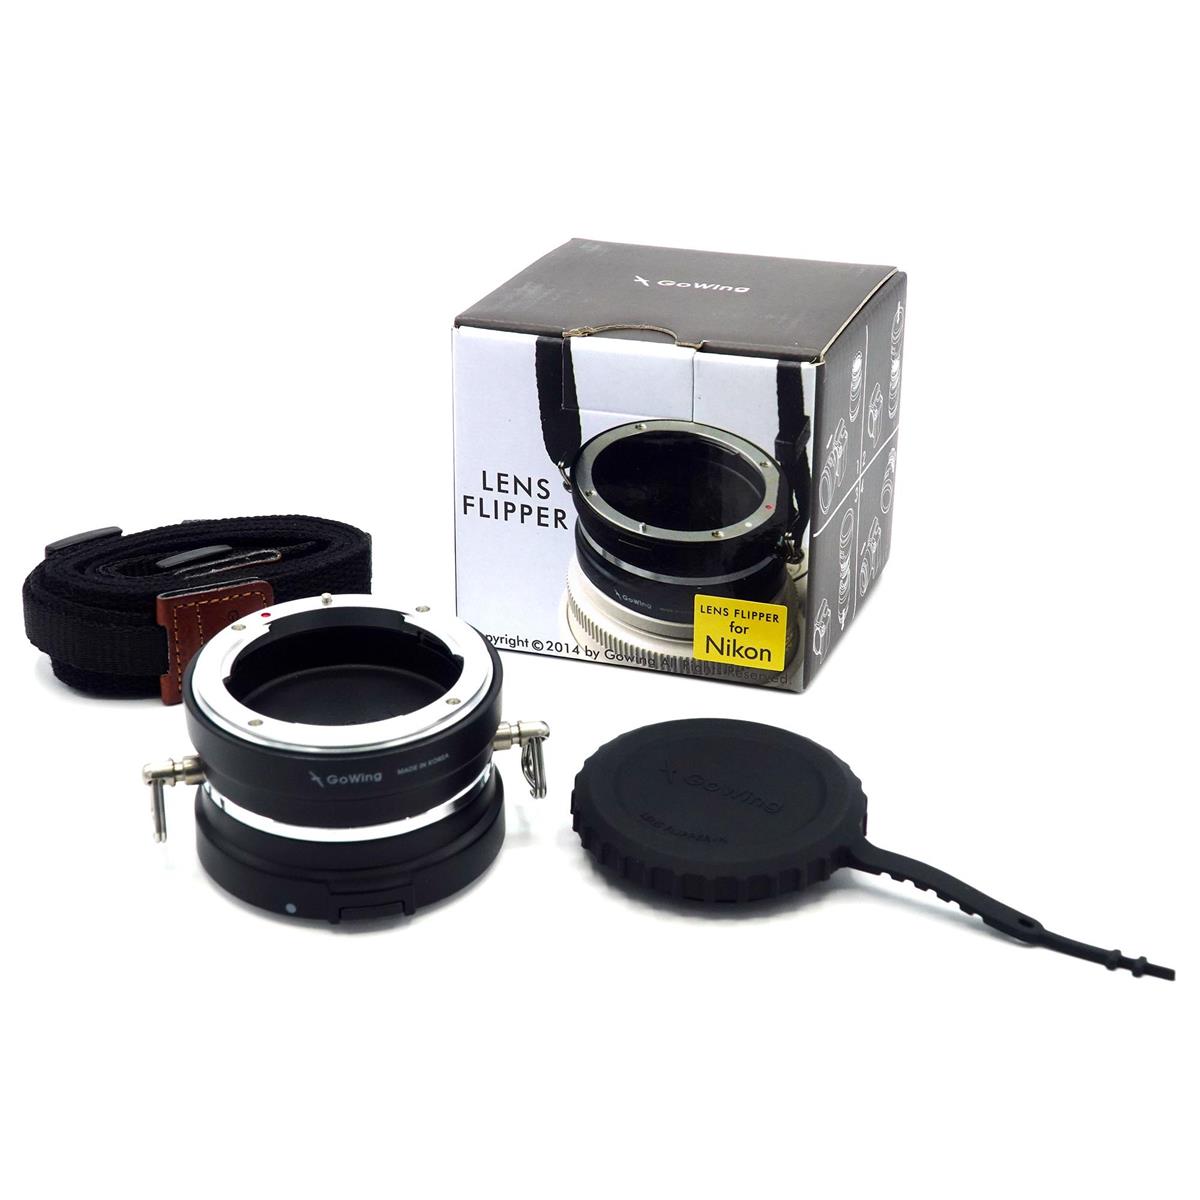 Image of Lenovo GoWing Lens Flipper for Nikon F Mount Lenses